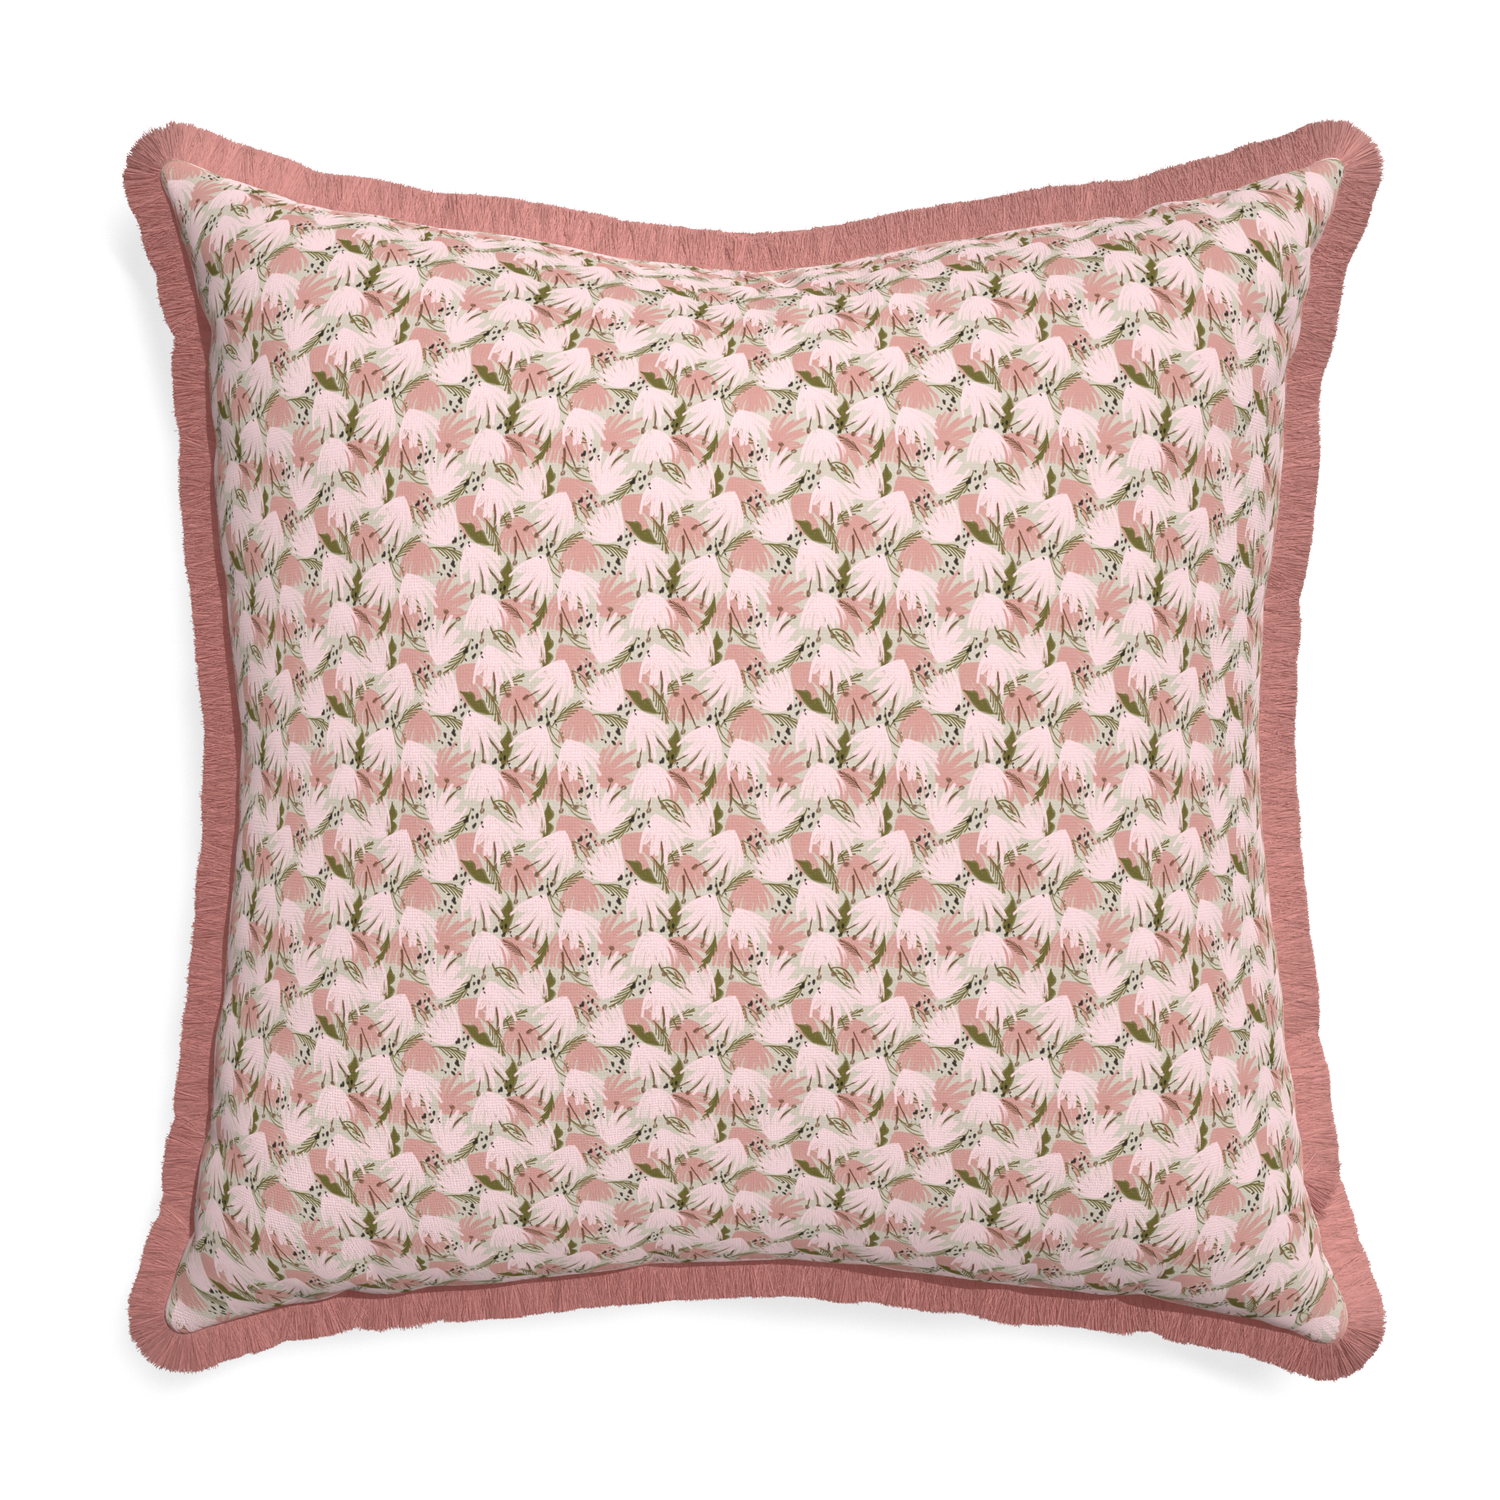 Euro-sham eden pink custom pillow with d fringe on white background